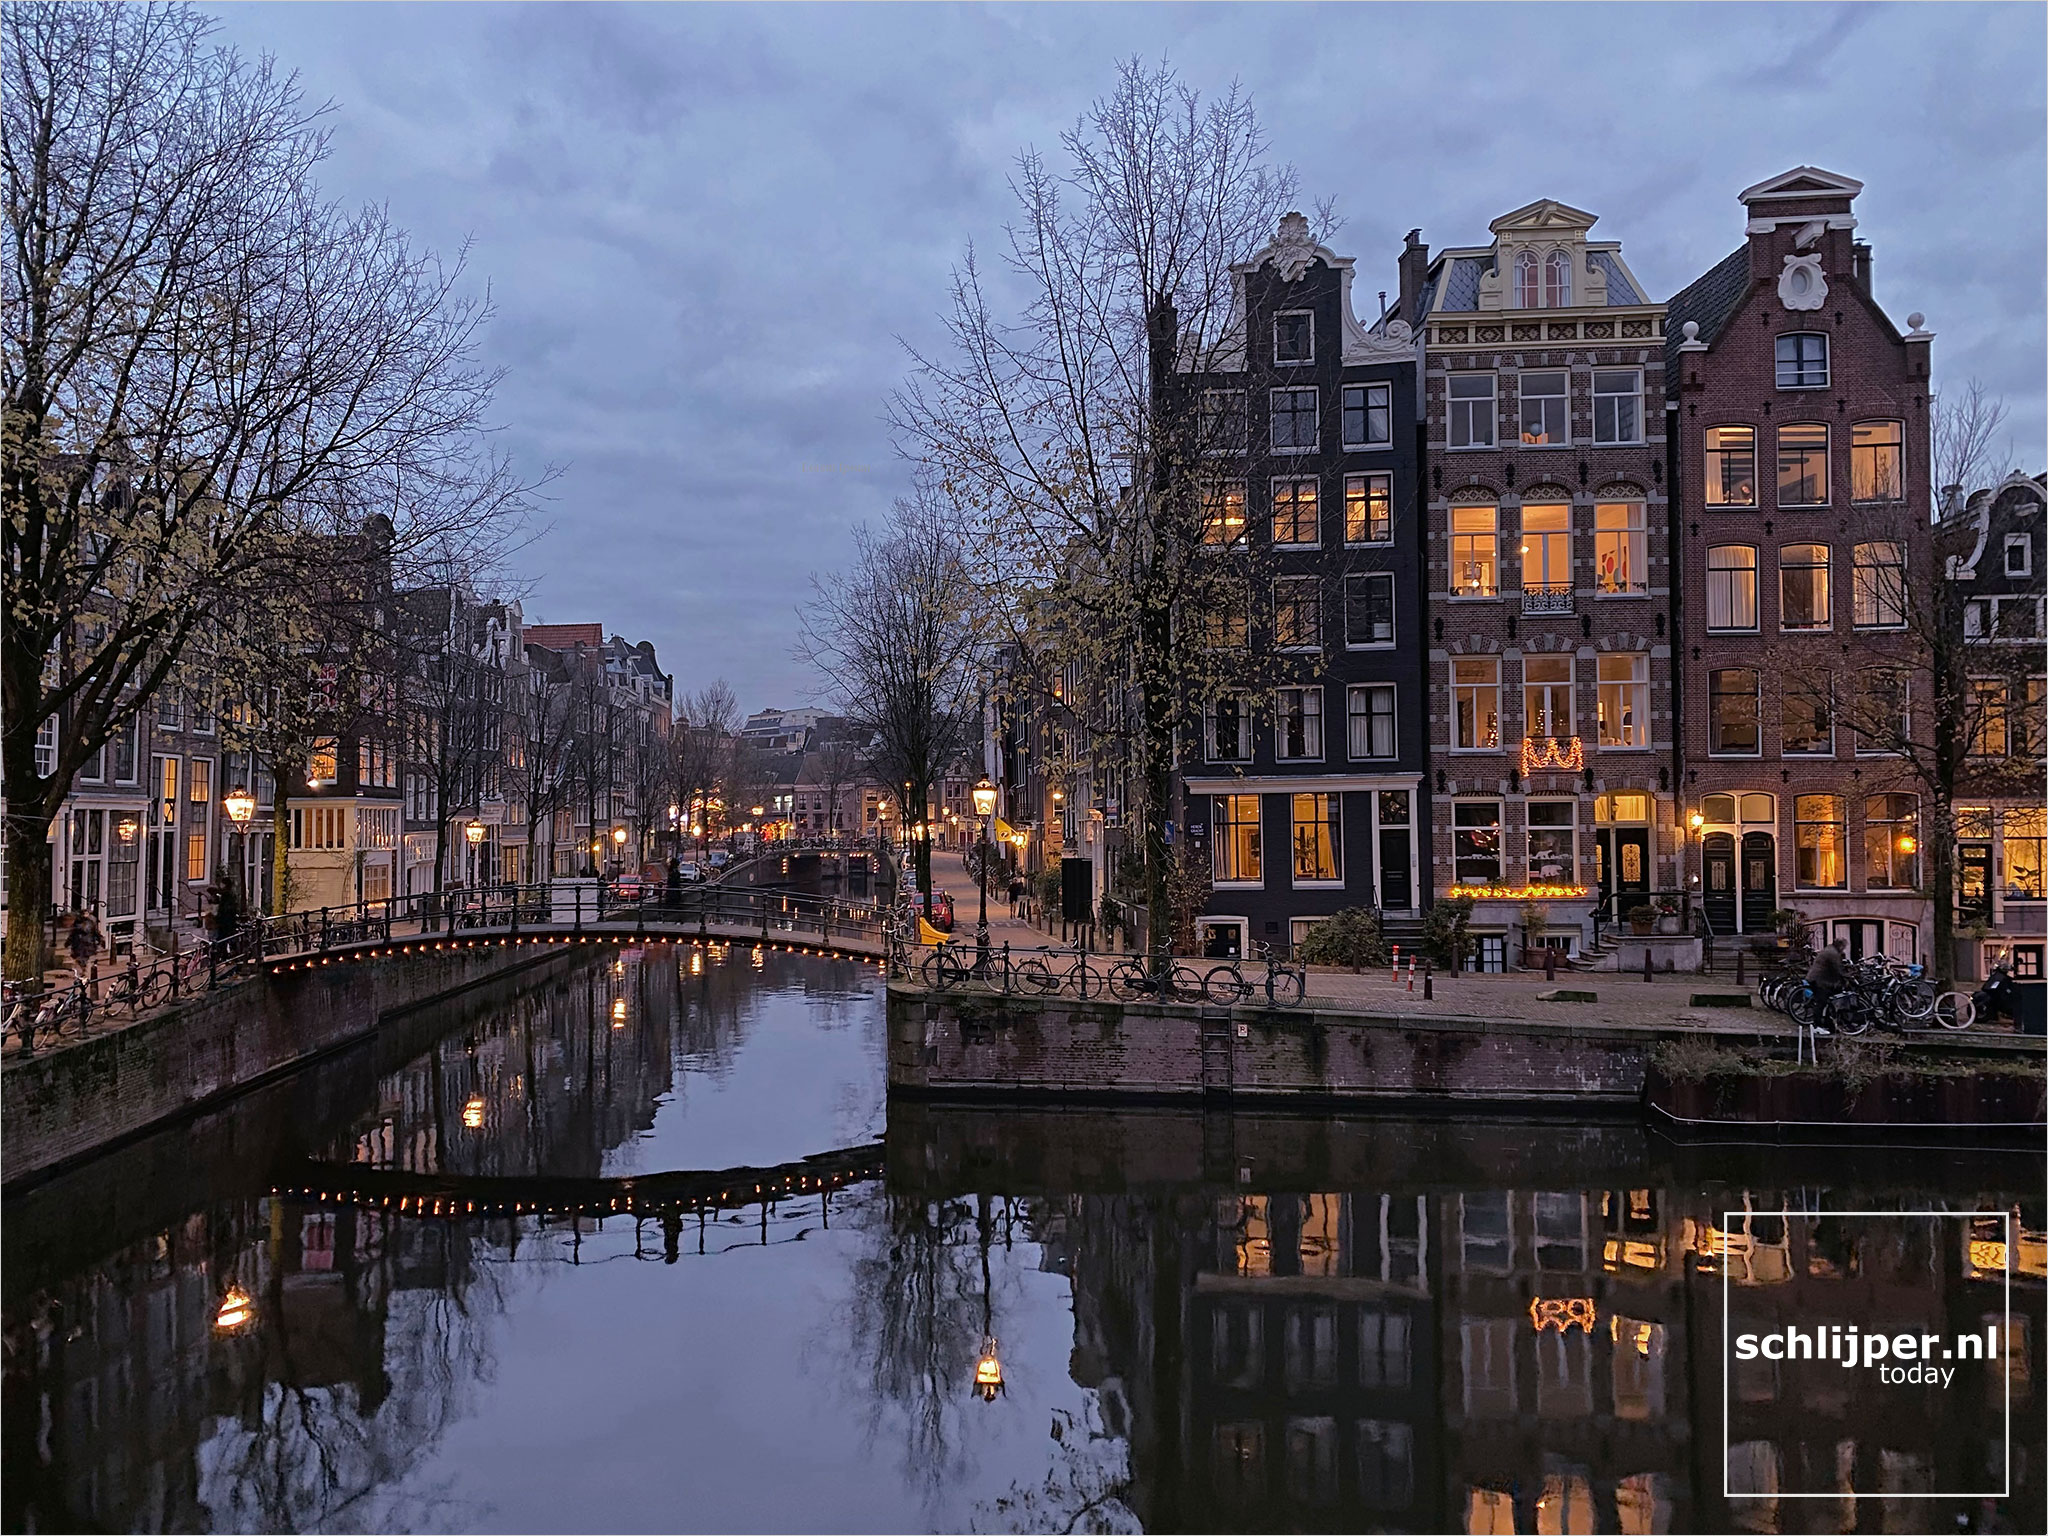 The Netherlands, Amsterdam, 8 december 2020